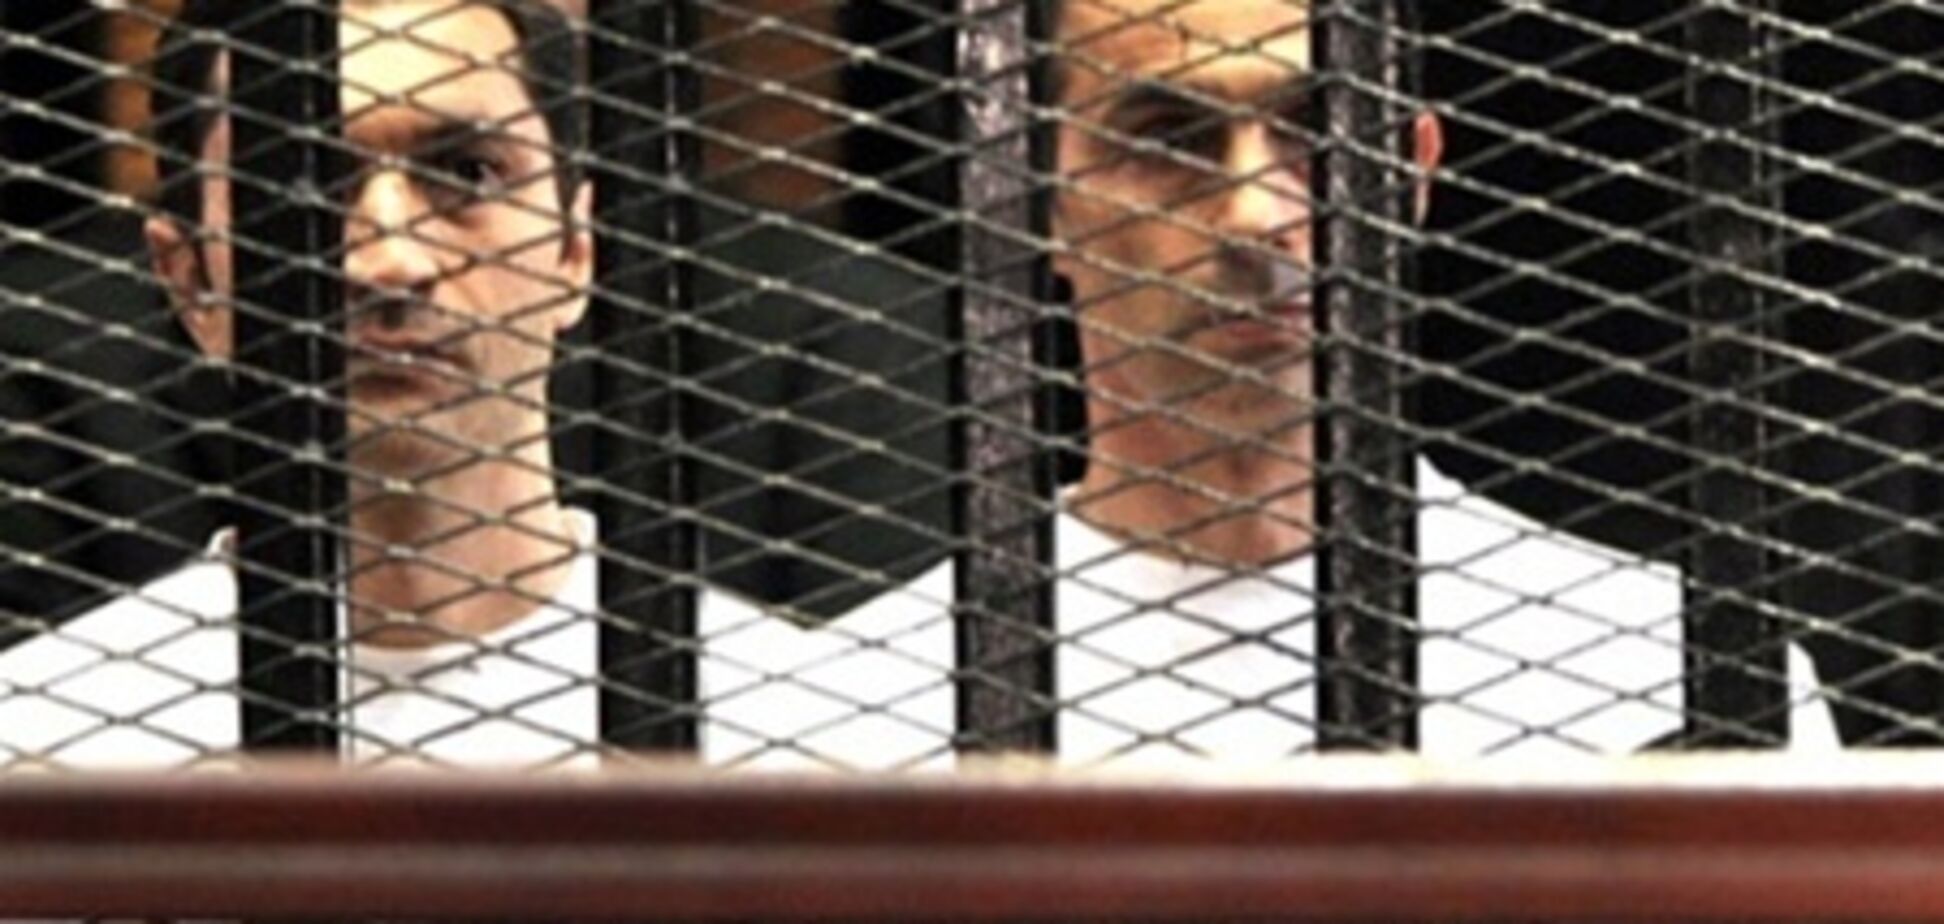 Сыновья Мубарака взяты под стражу